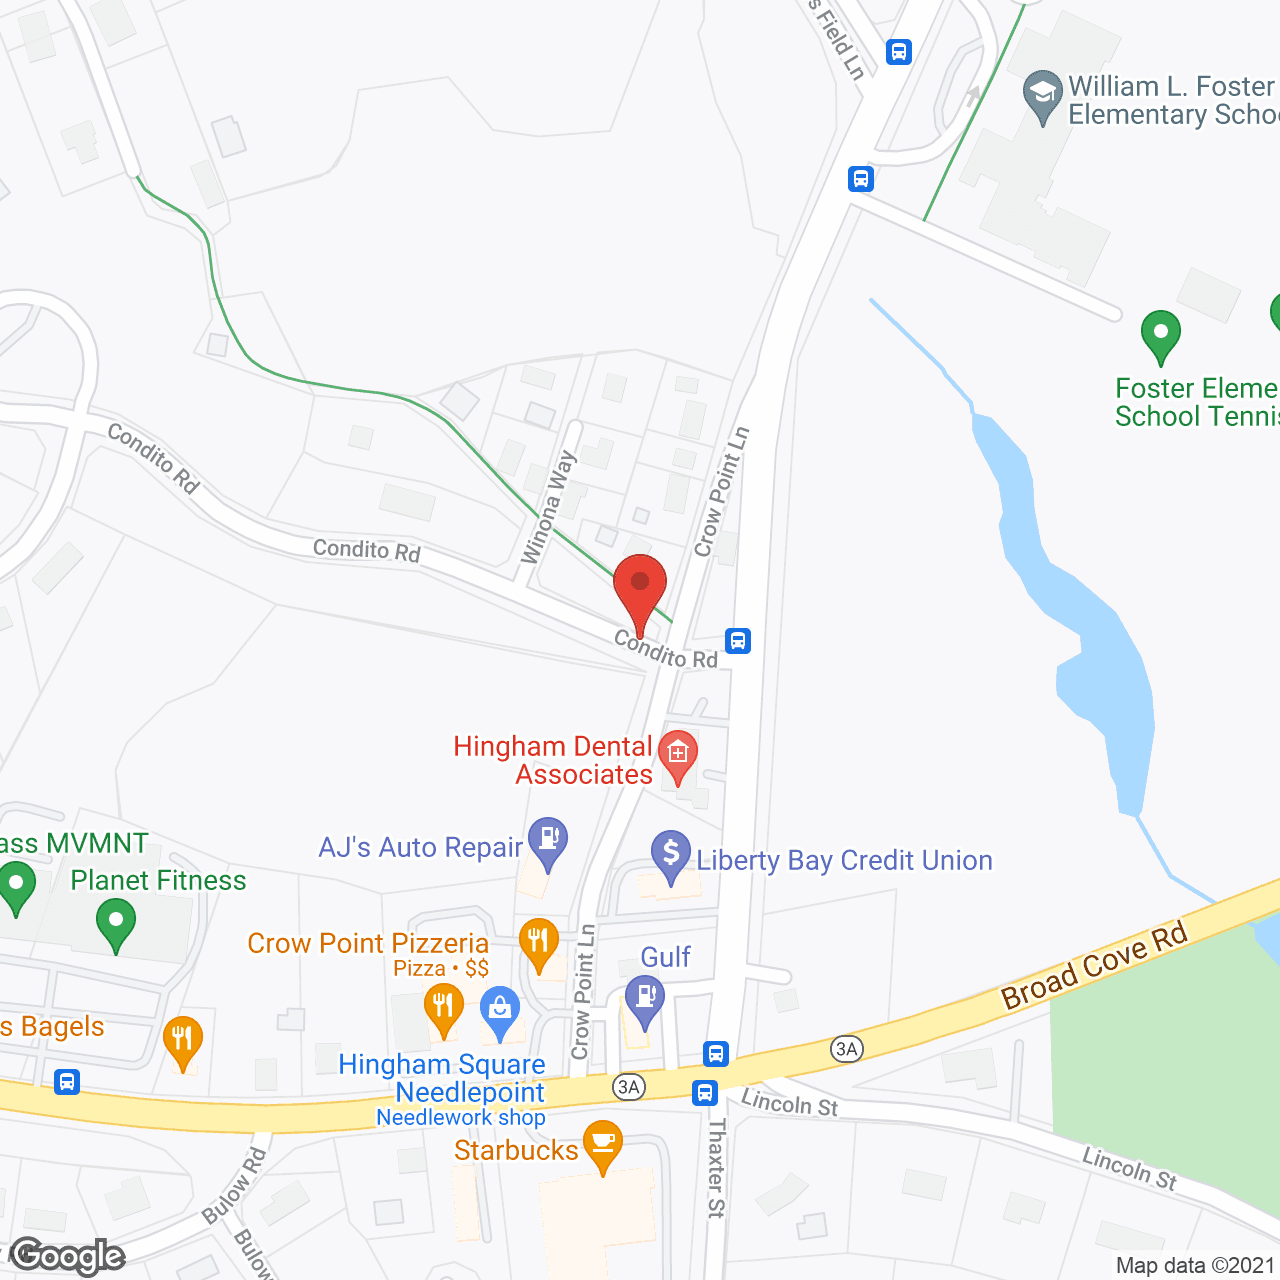 Harbor House Rehabilitation and Nursing Center in google map